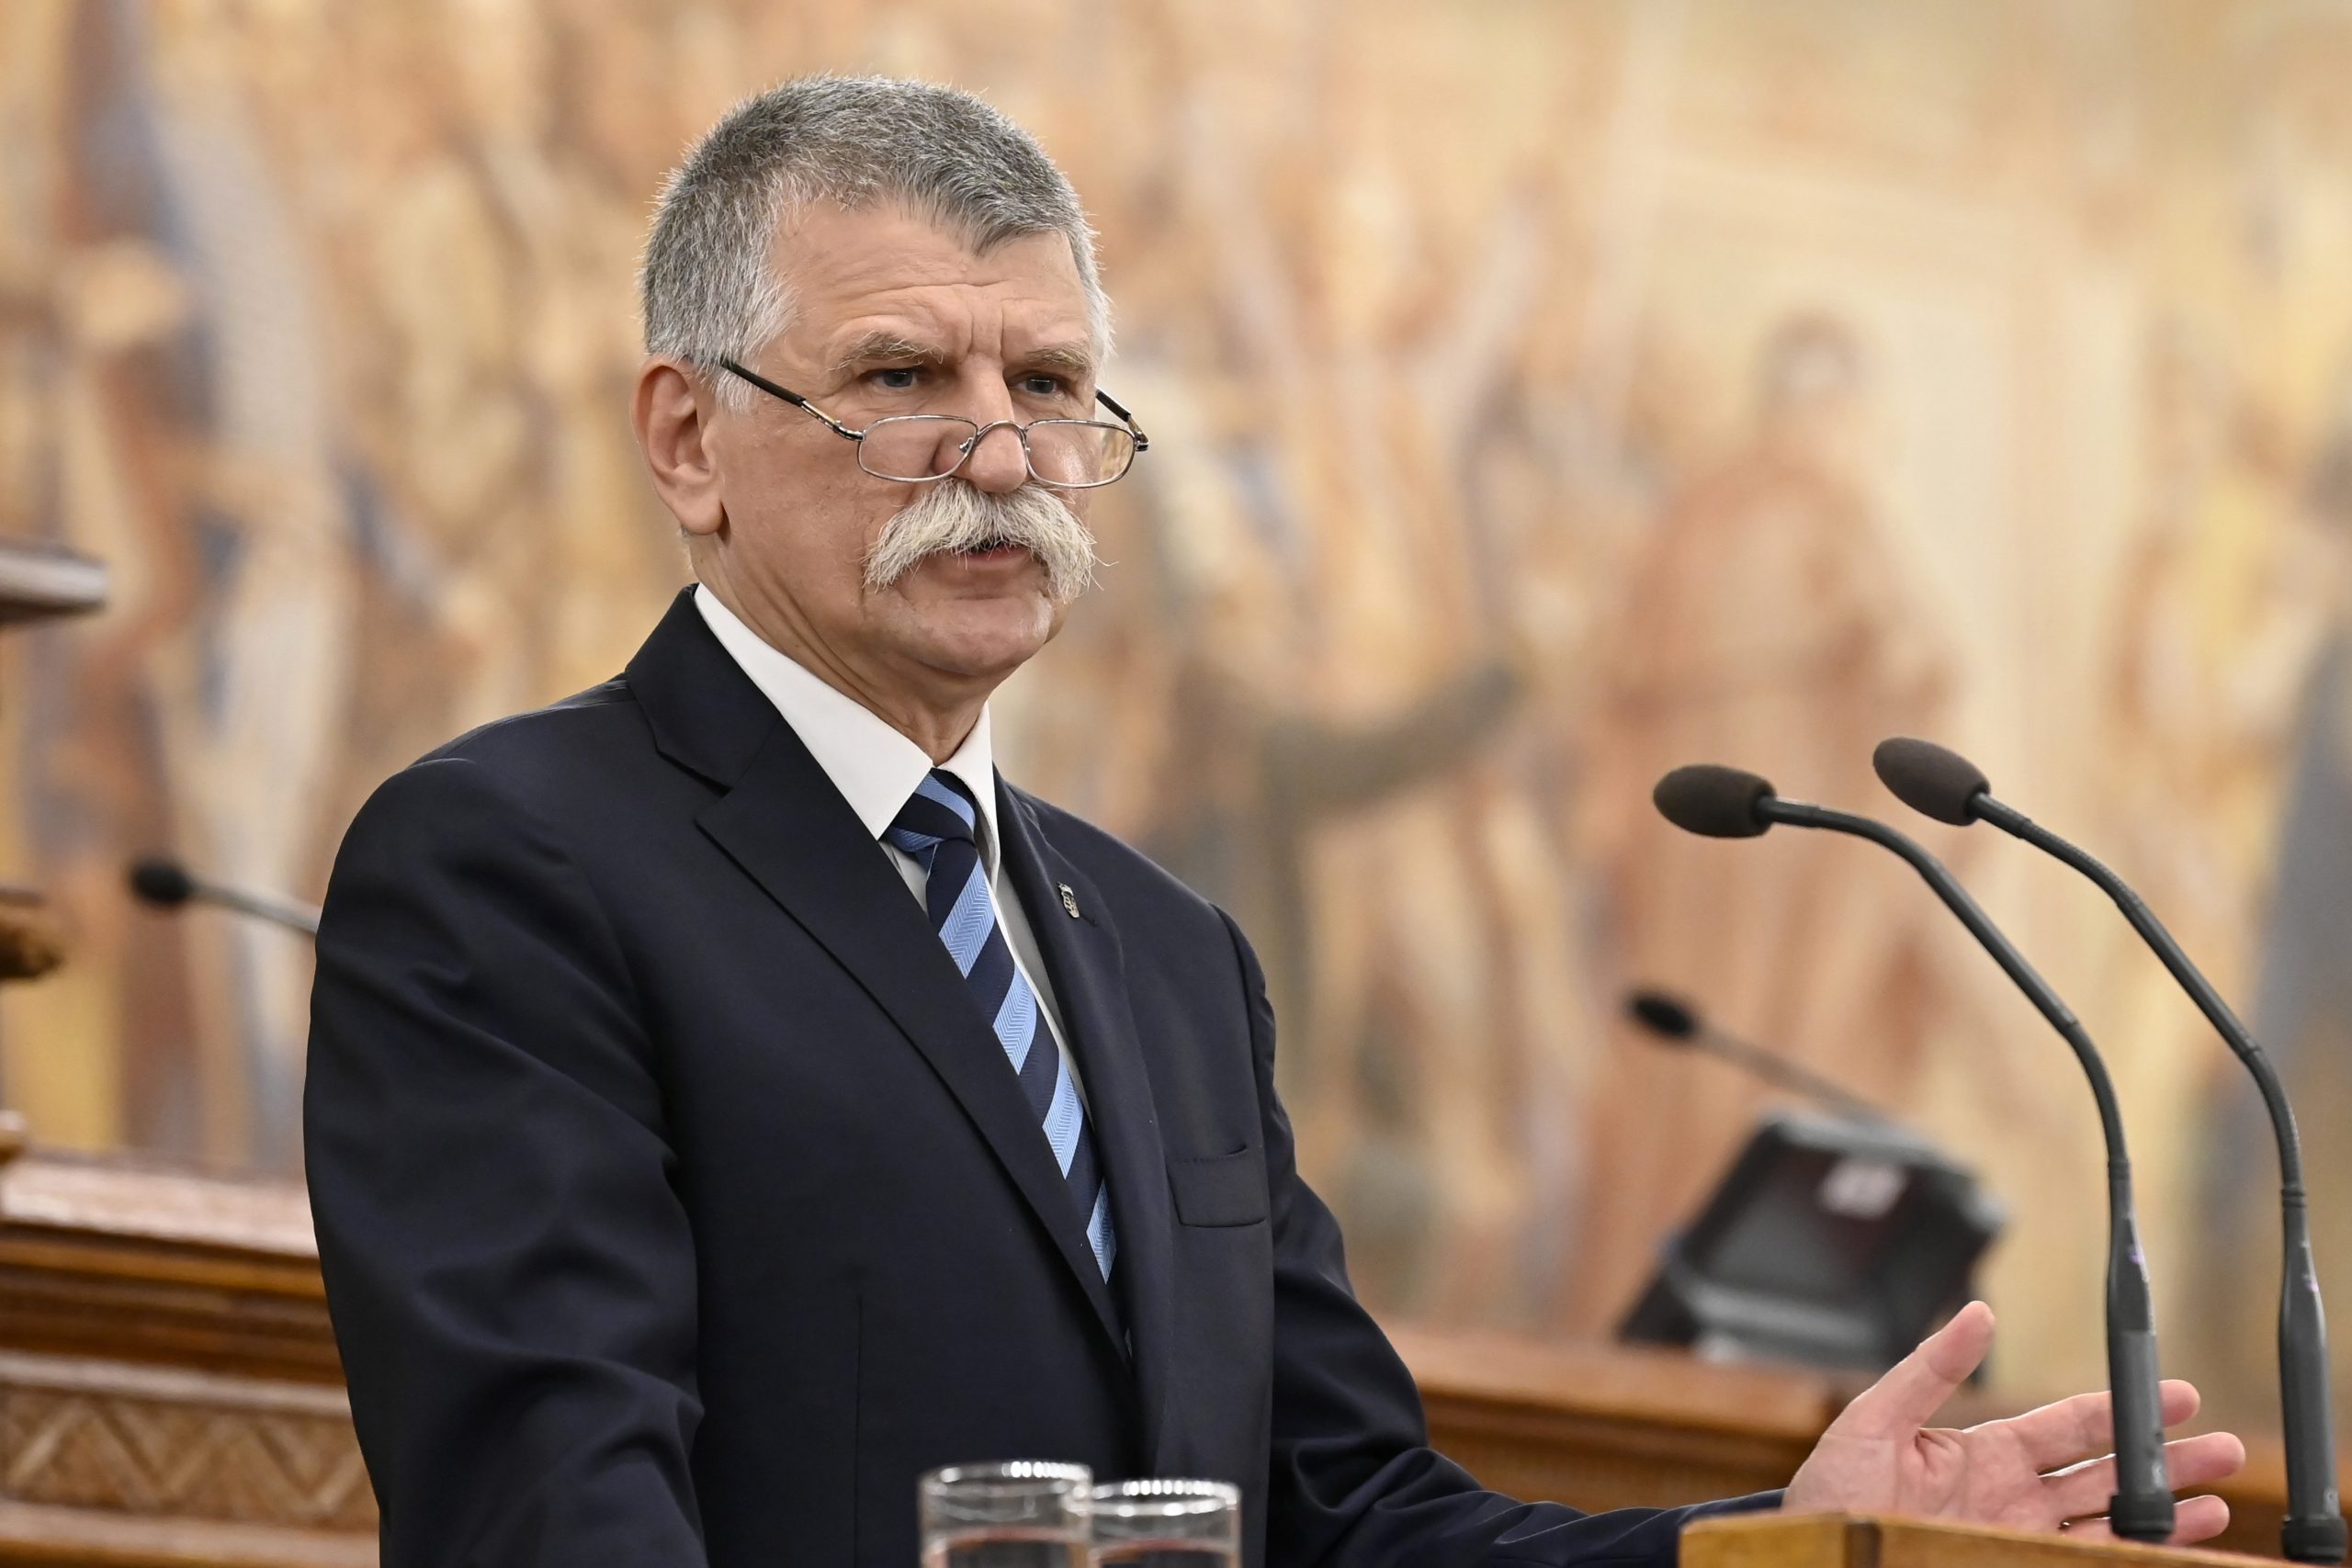 House Speaker Kövér Discusses Security Policy, Migration in Vilnius